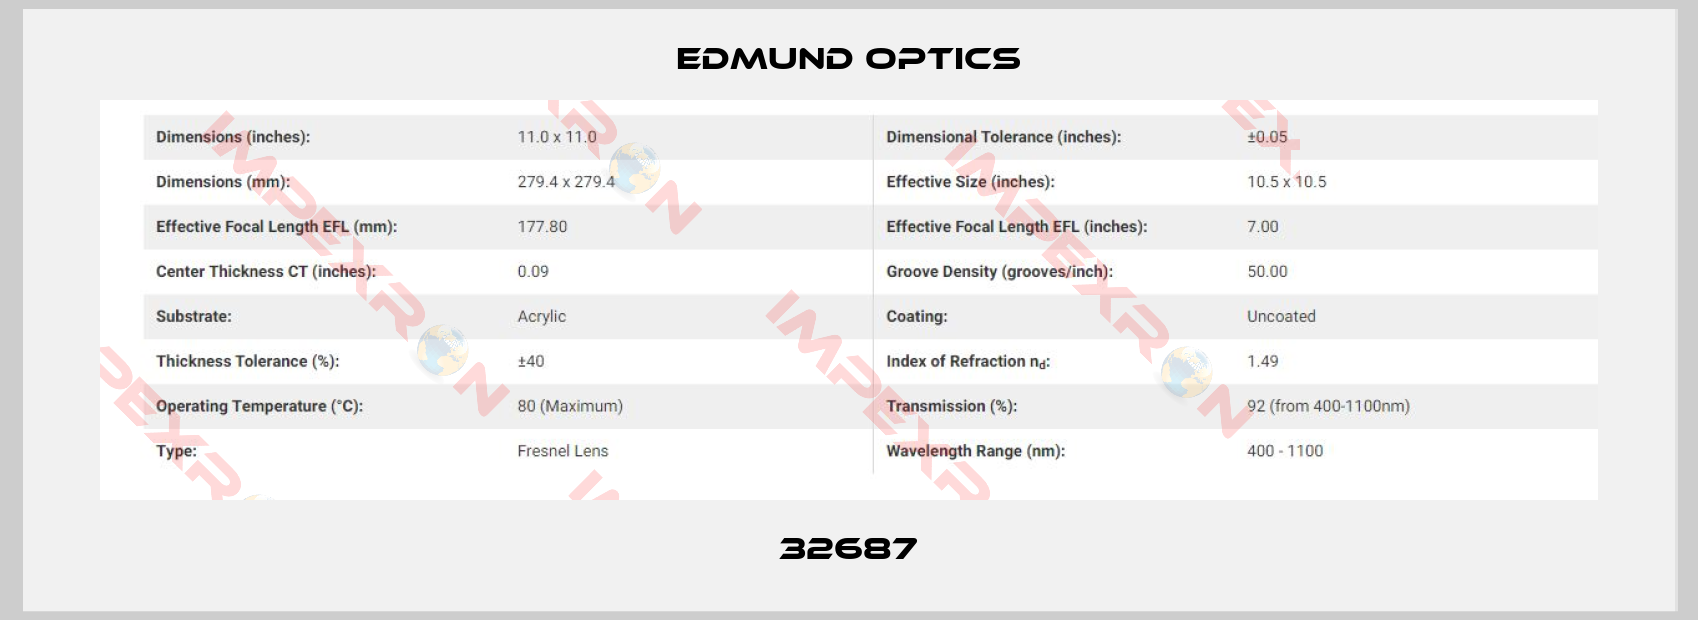 Edmund Optics-32687